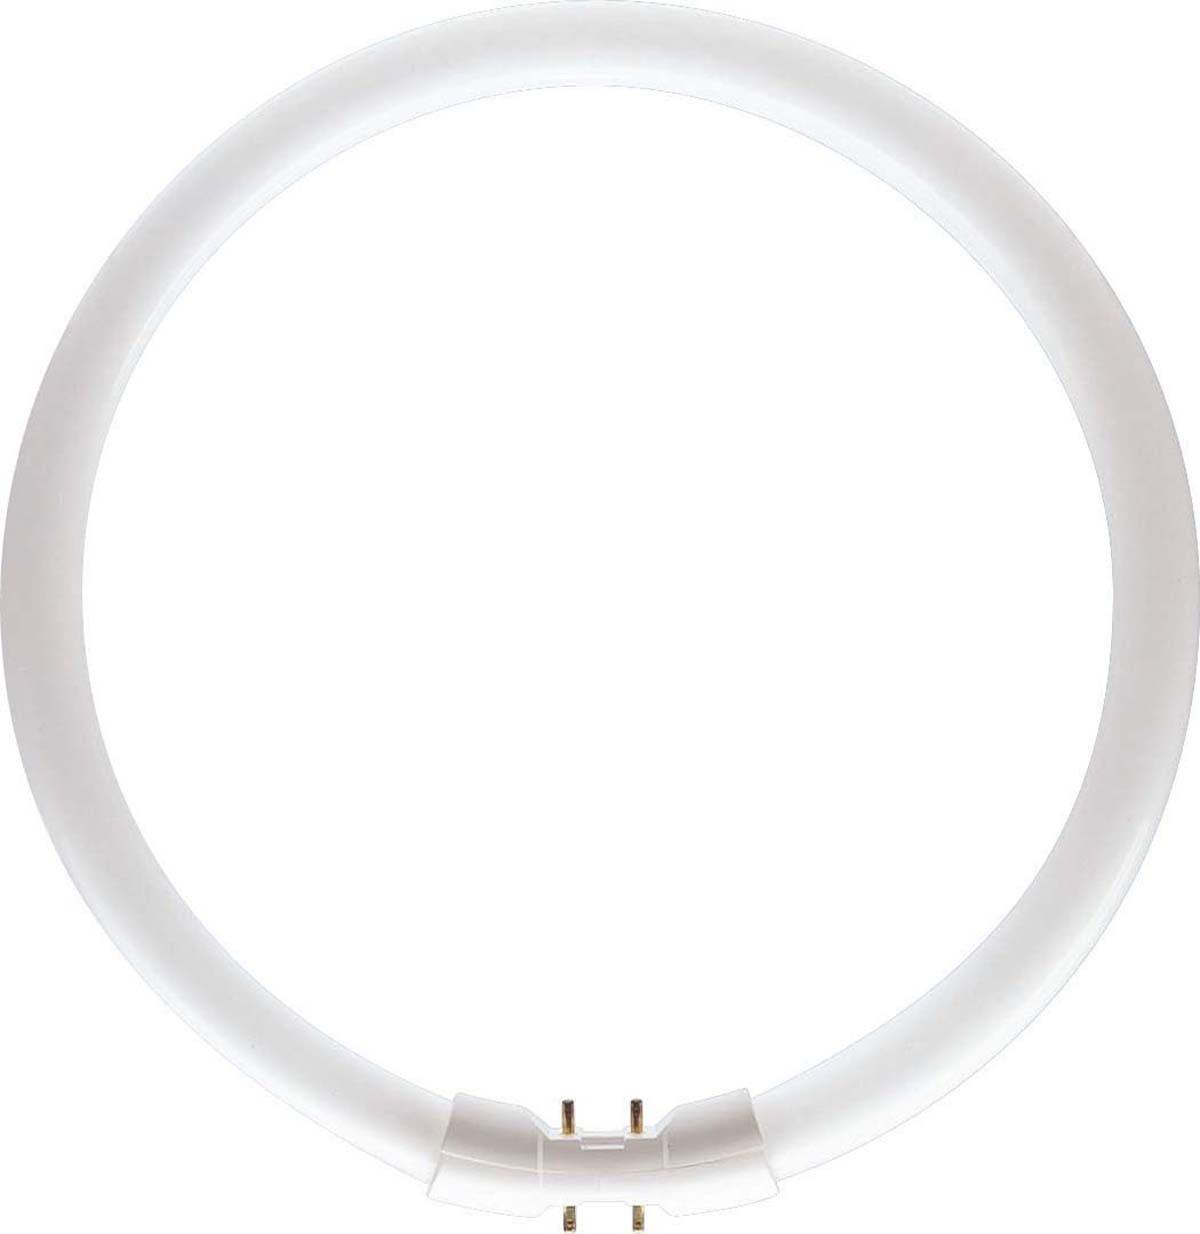 Philips Lighting Leuchtstofflampe 60W nws ringförmig TL5 C 60W/840 